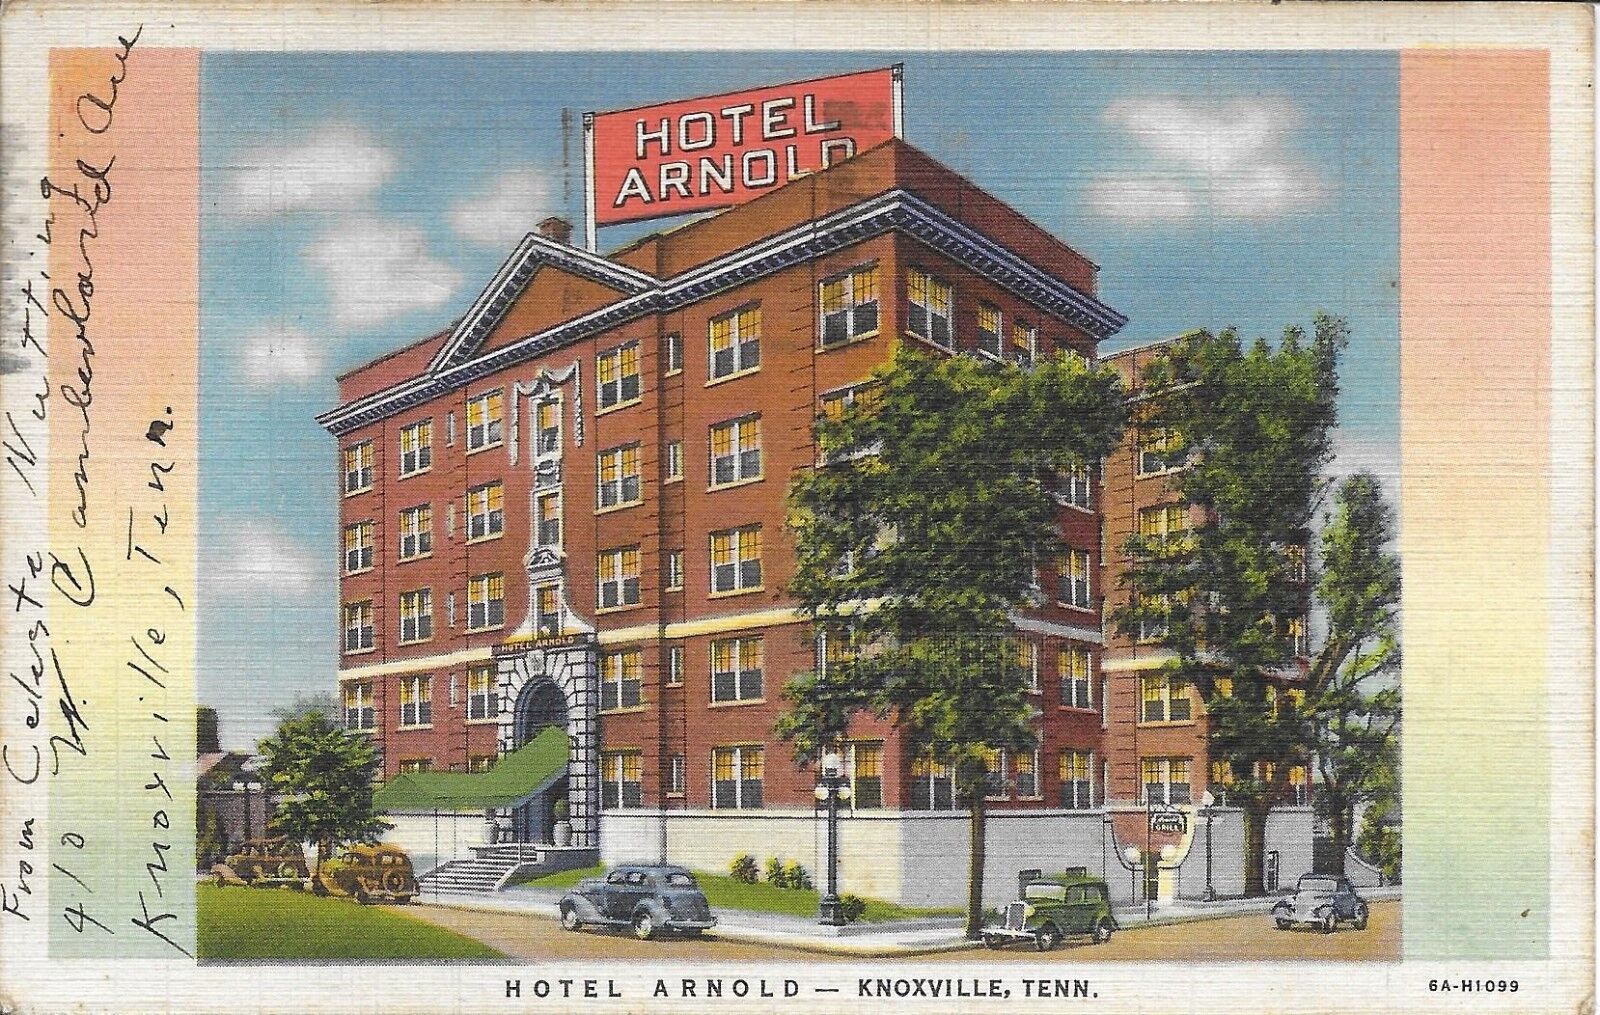 Hotel Arnold Nashville TN postally used in 1938